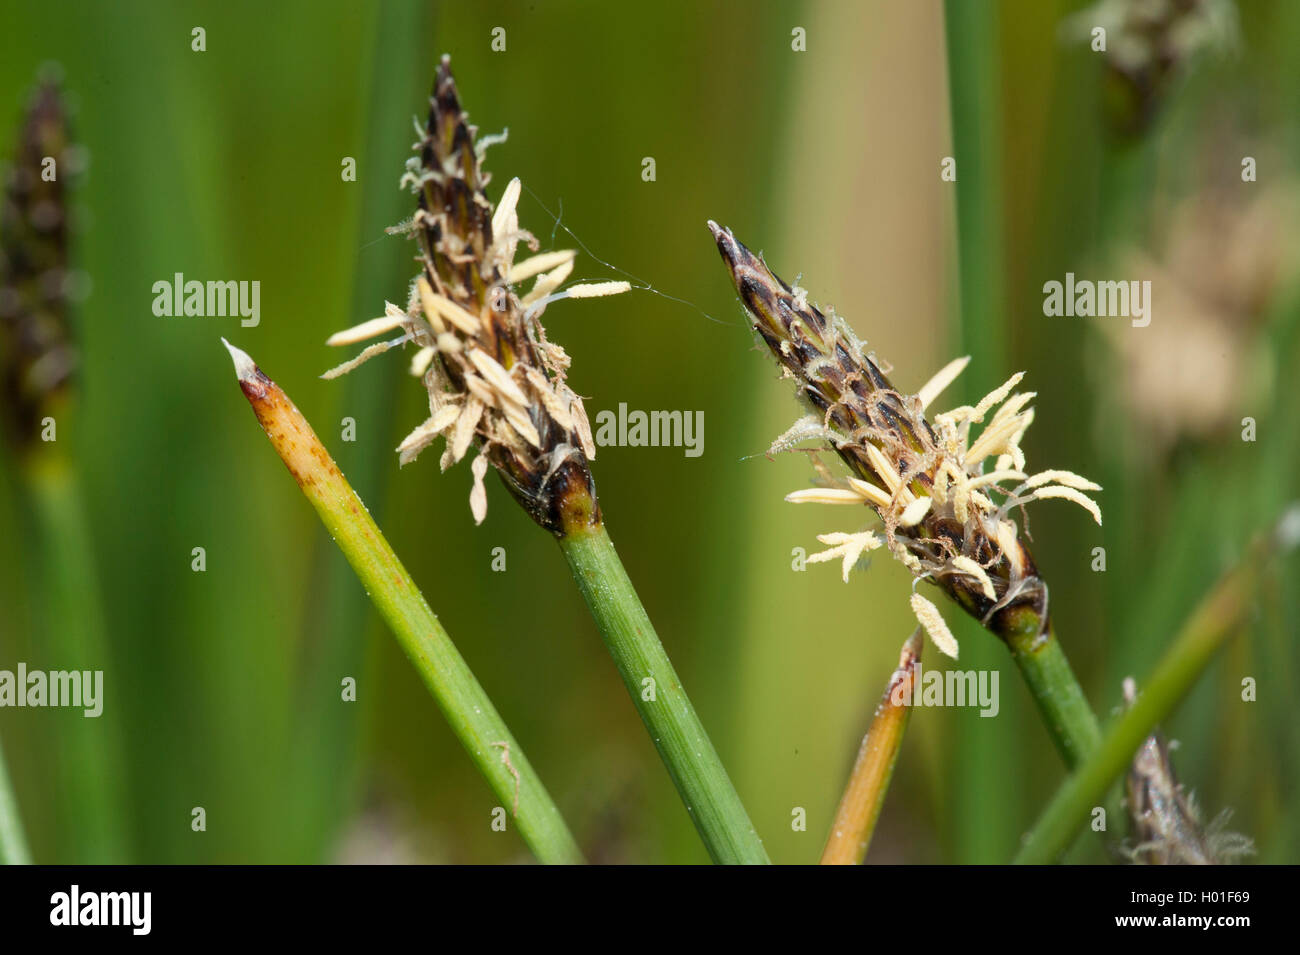 creeping spike-rush, common spike-rush, pale spike-rush (Eleocharis palustris), inflorescence, Germany Stock Photo